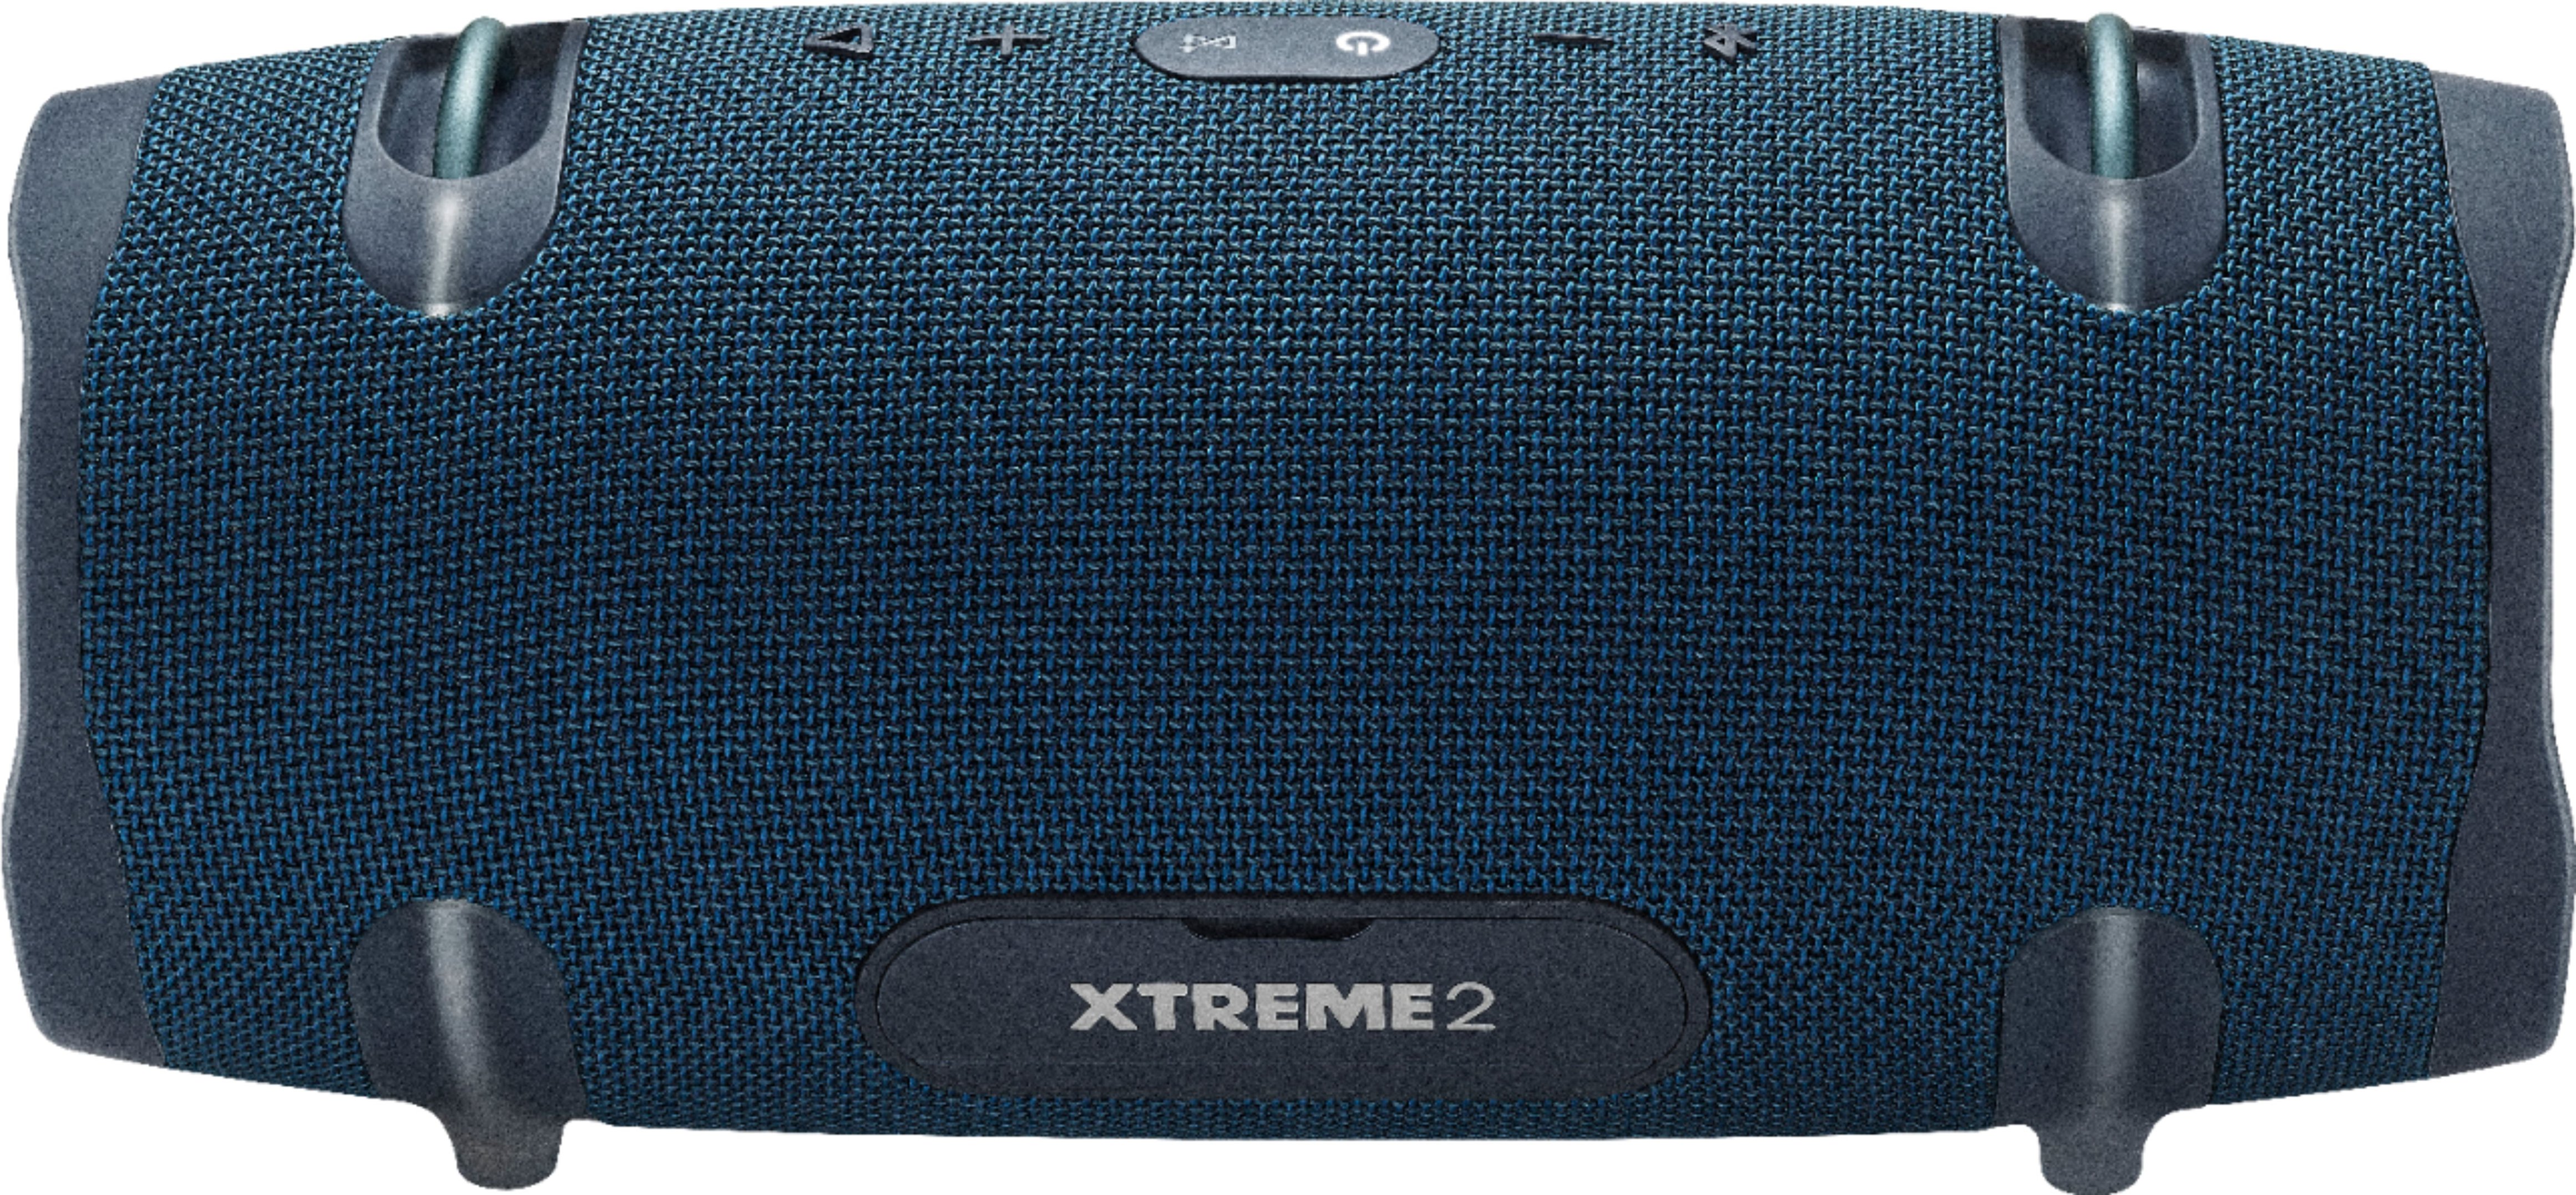 Black New JBL Xtreme 2 Portable Bluetooth Wireless Waterproof Speaker 